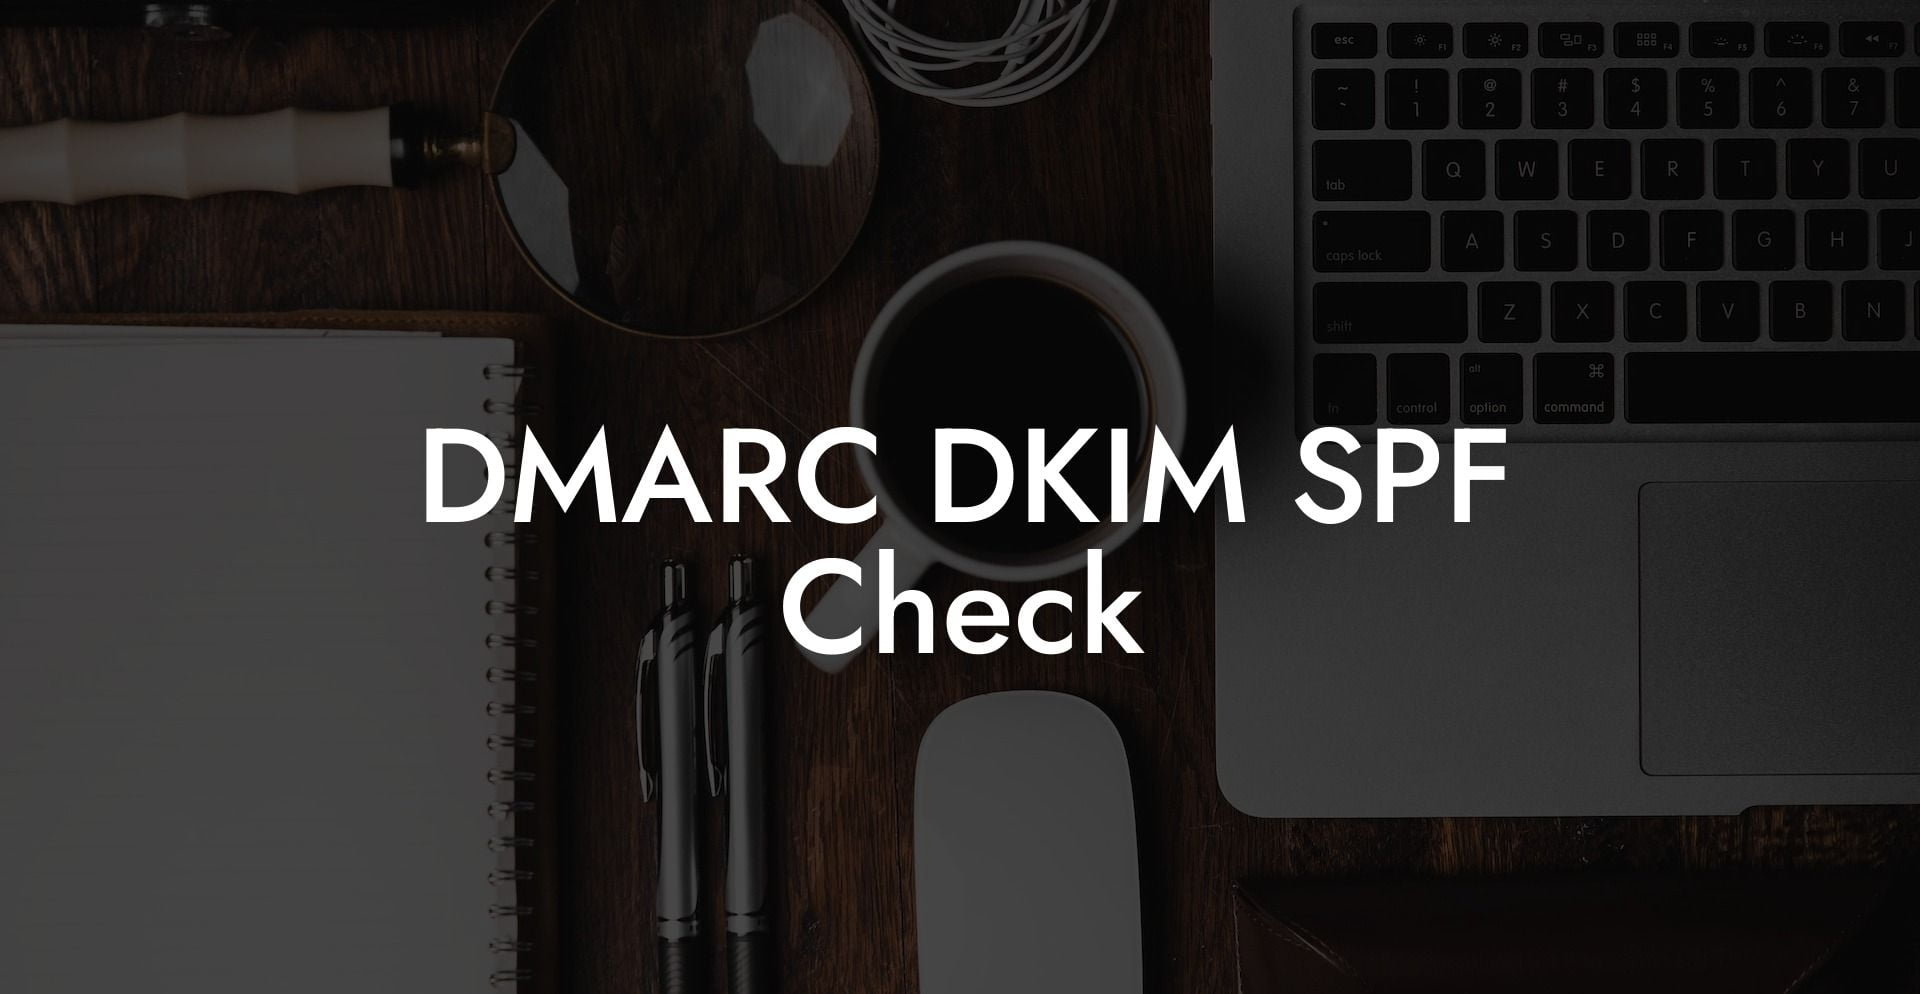 DMARC DKIM SPF Check